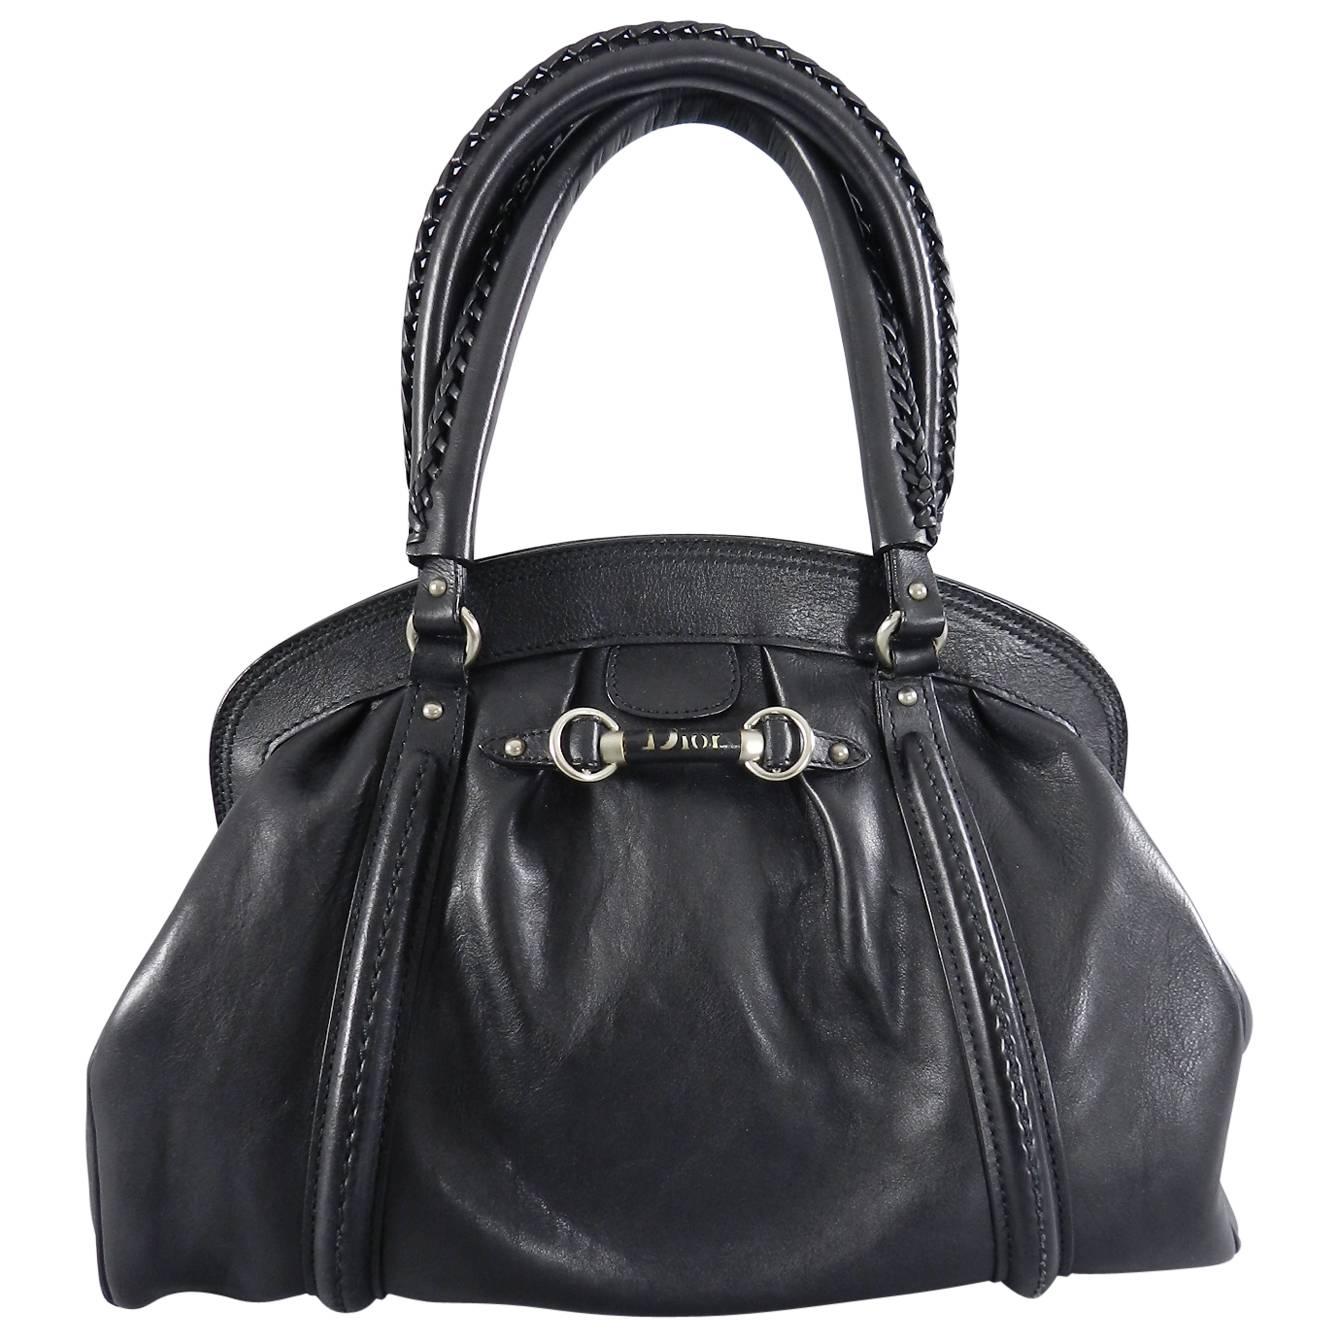 Christian Dior Black Handbag with Braided Handles For Sale